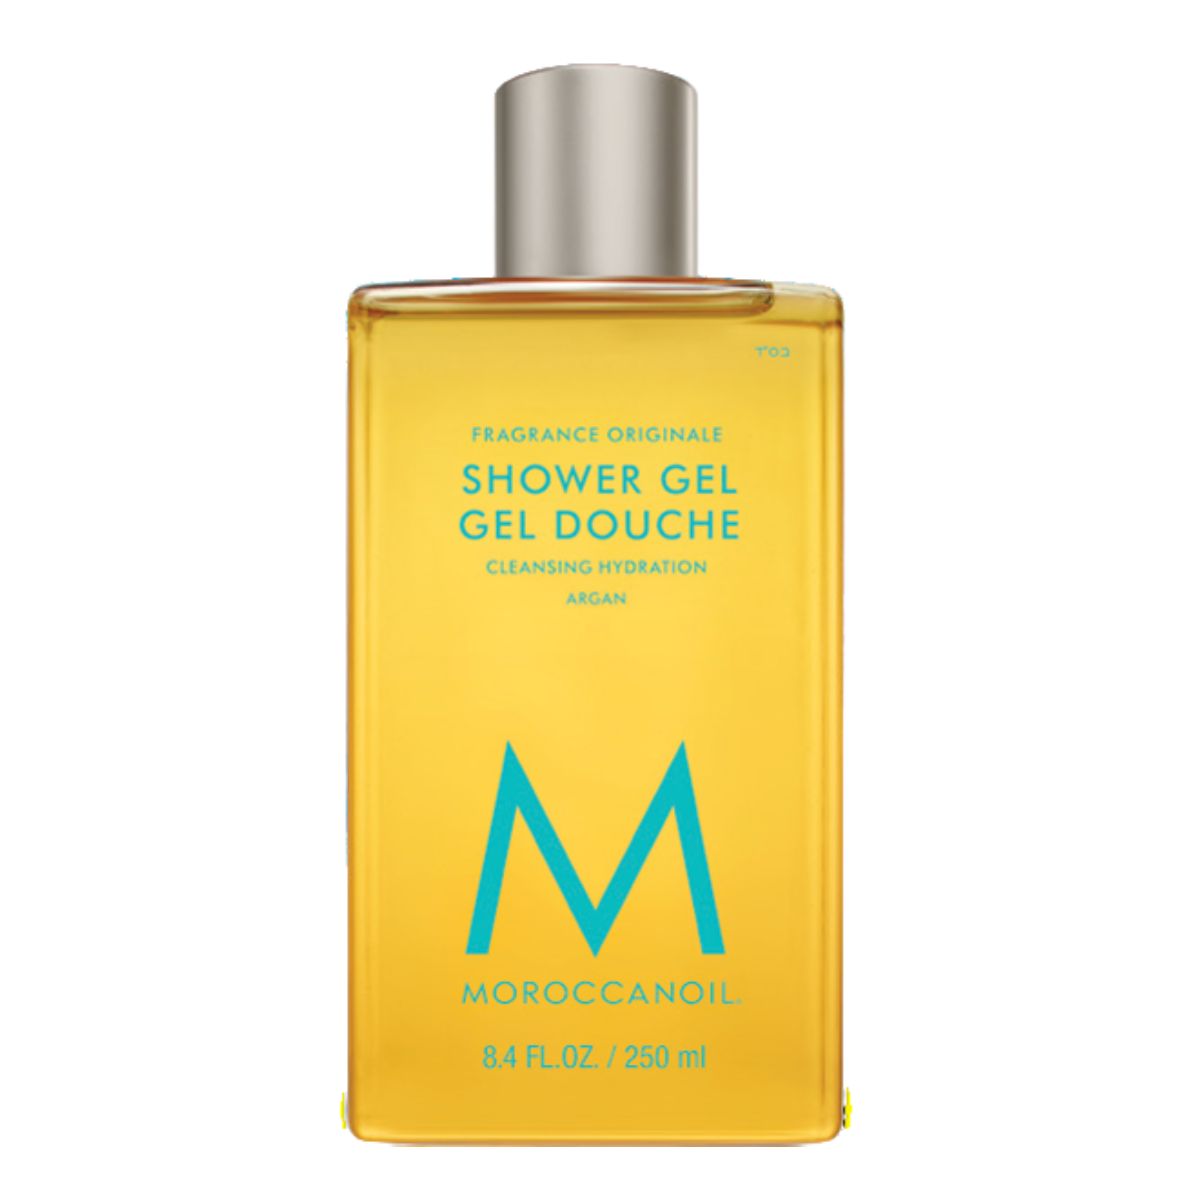 Moroccanoil Body Shower Gel Original Fragrance